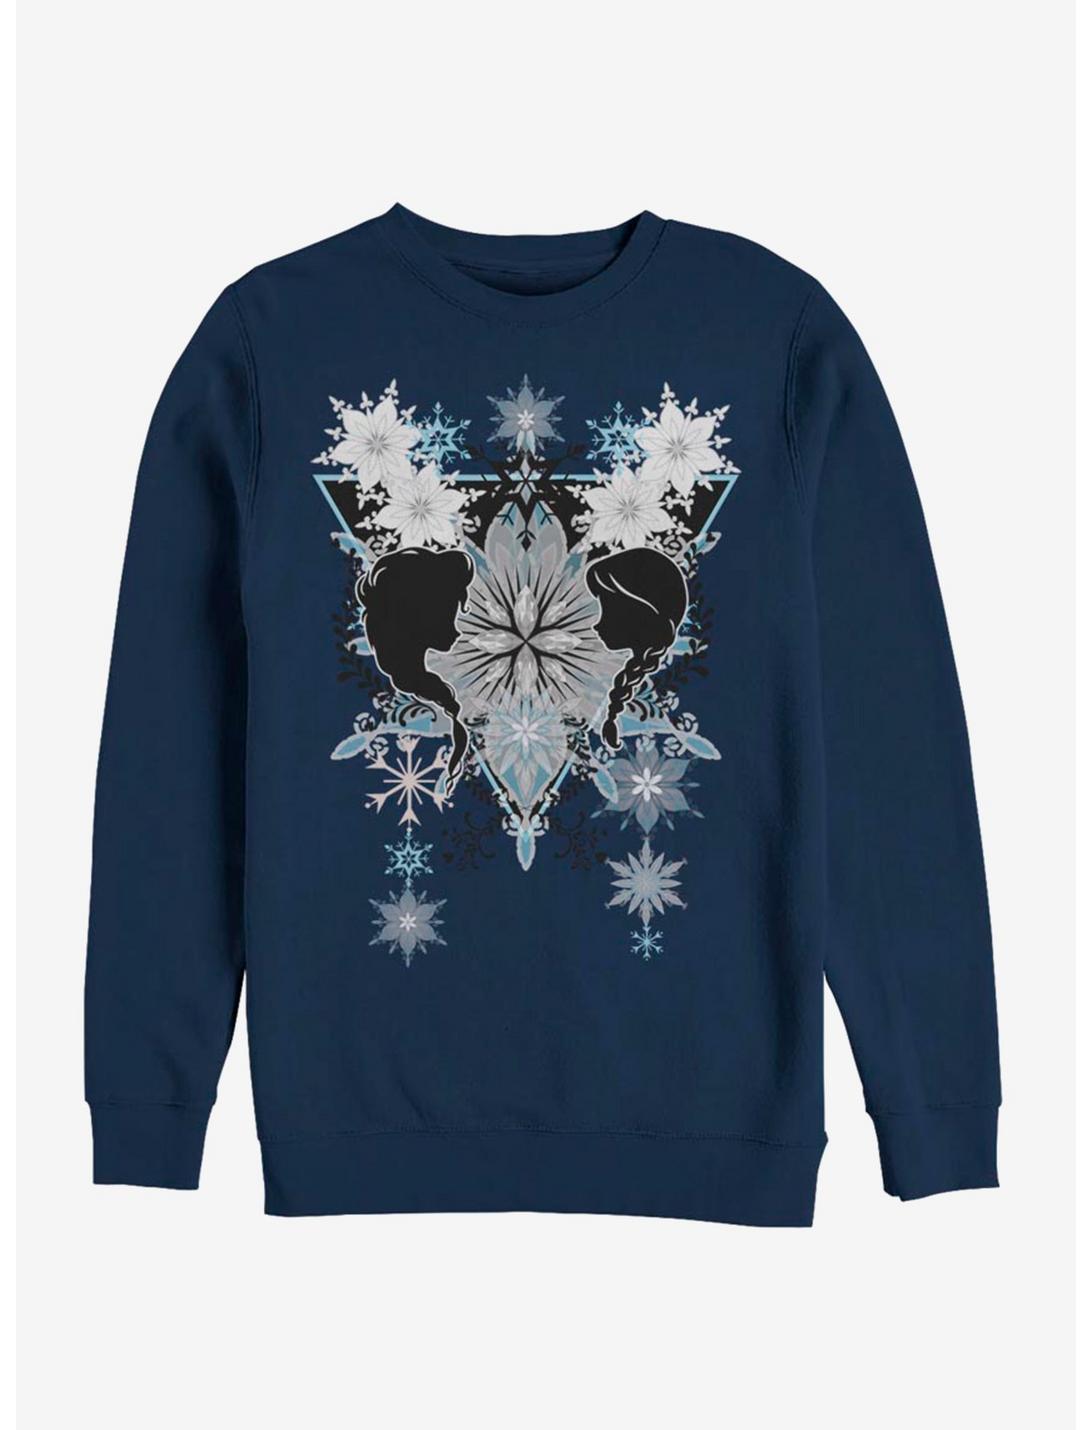 Disney Frozen Snowflake Boho Sweatshirt, NAVY, hi-res